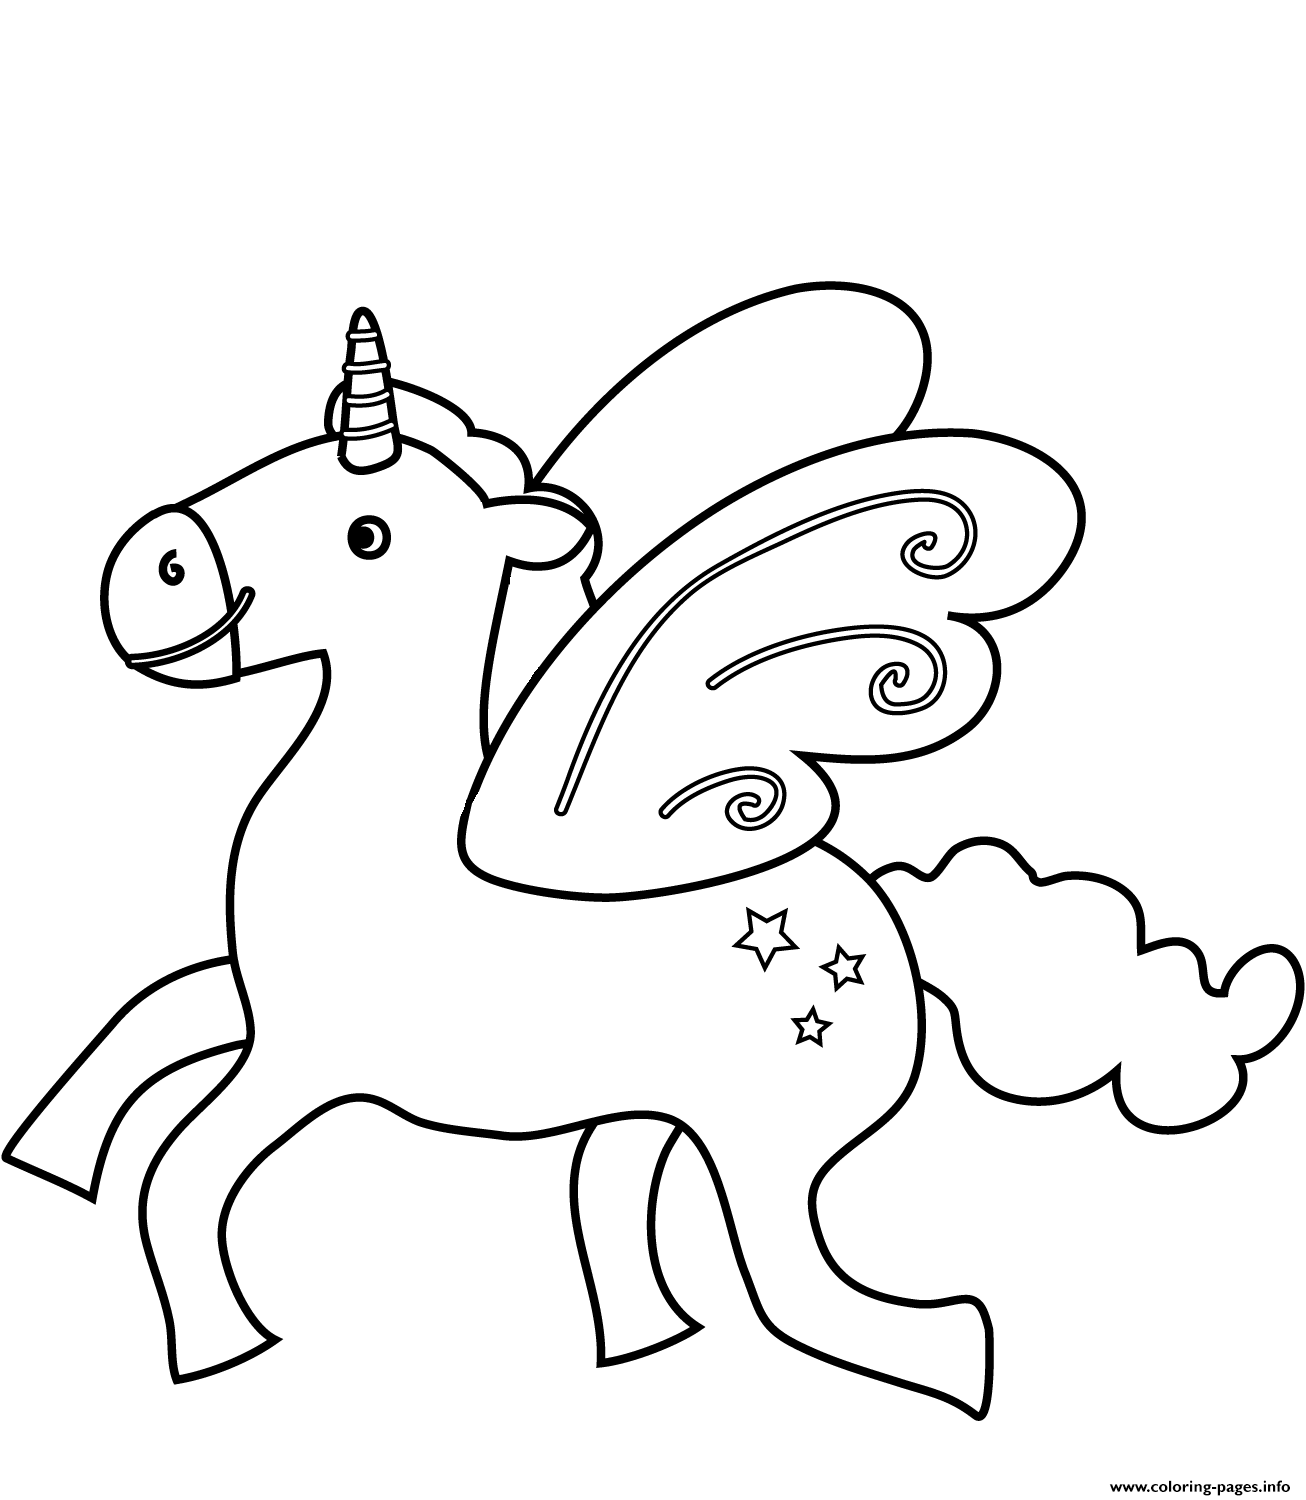 Flying Unicorn coloring